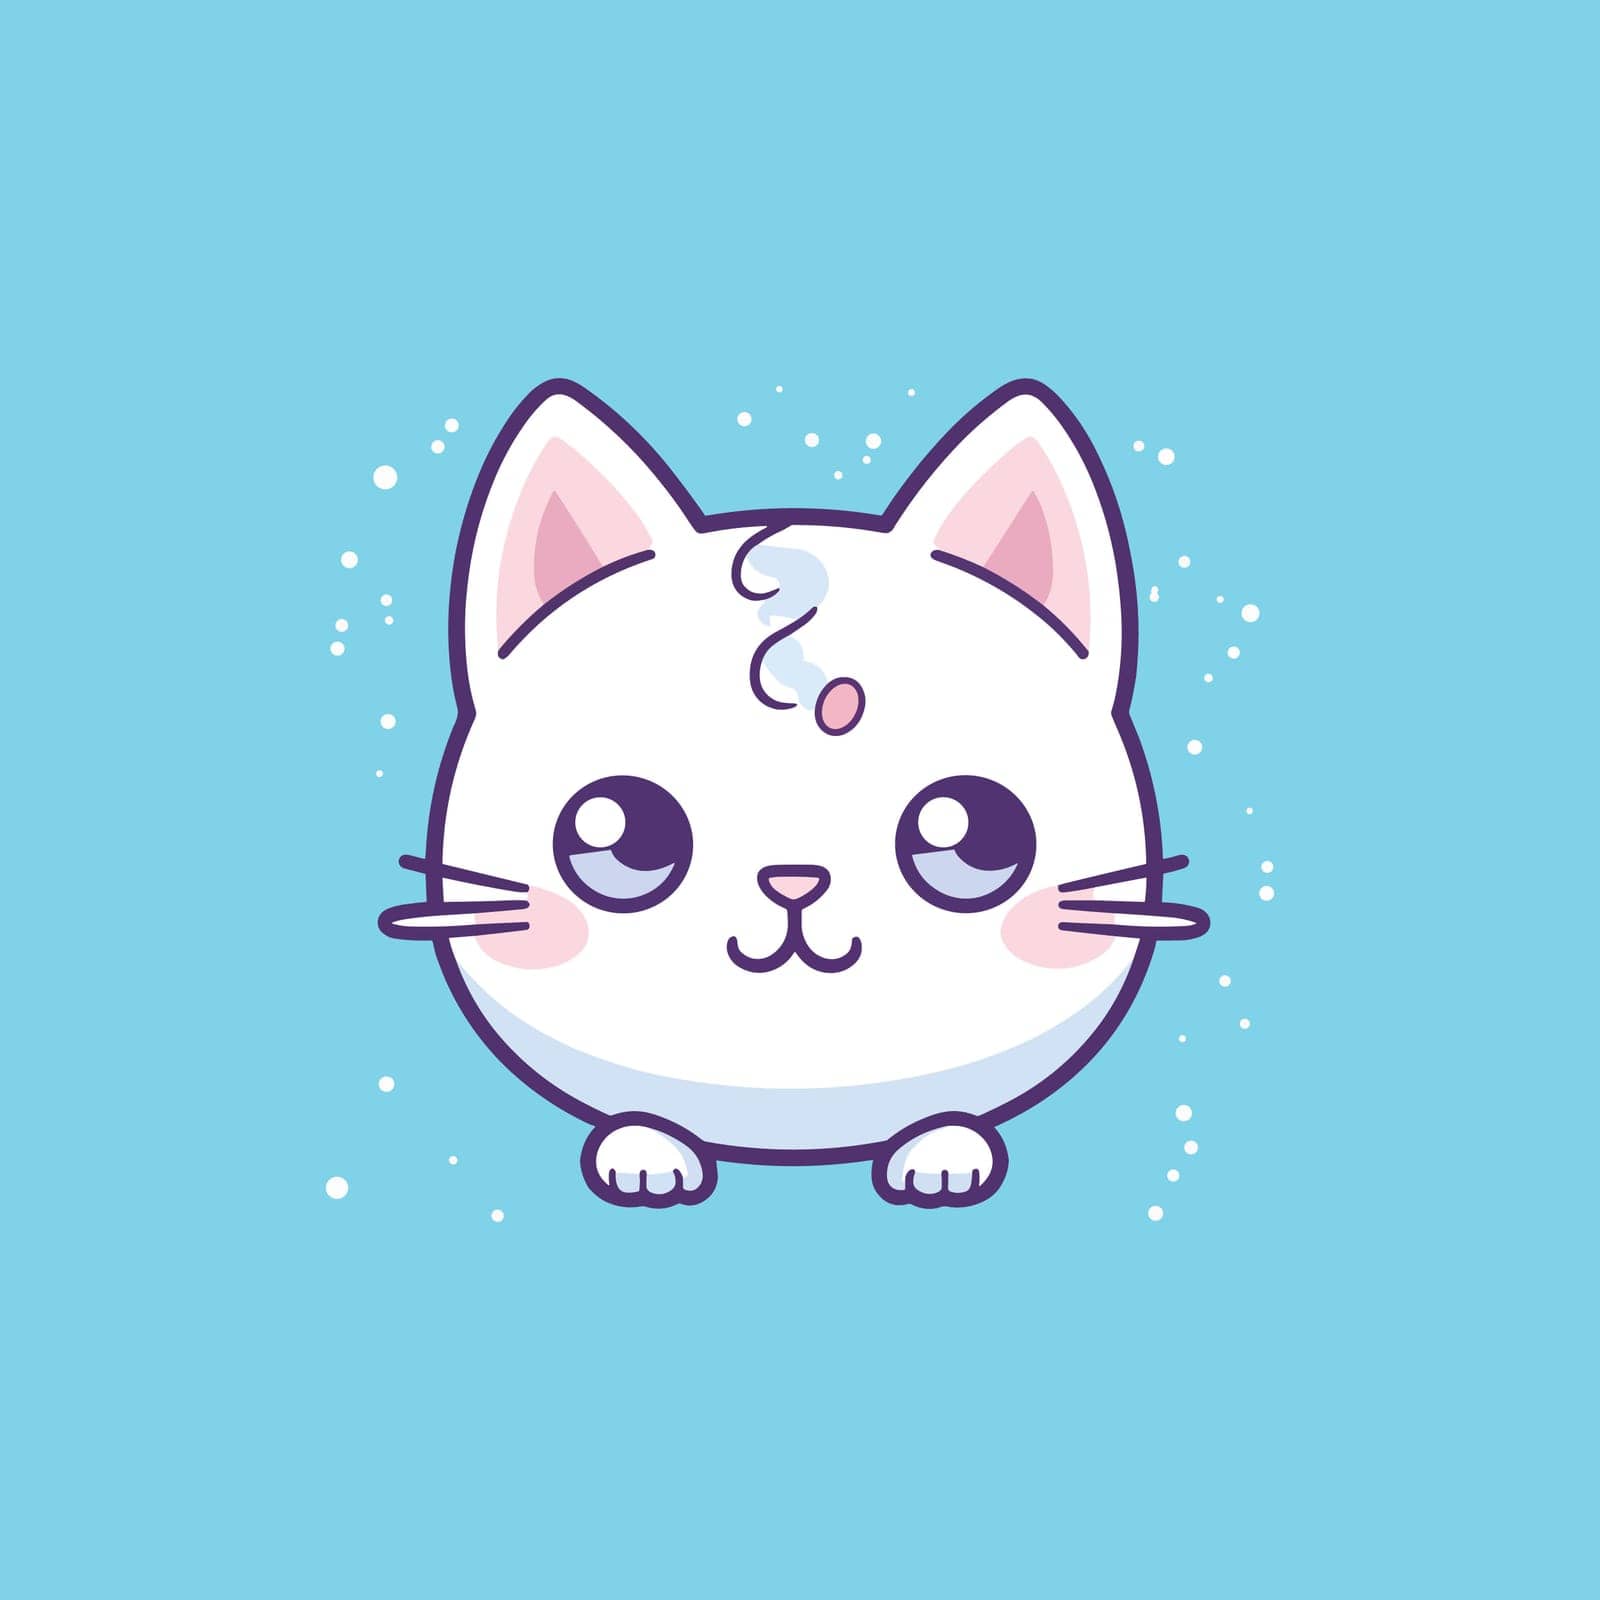 Cute cat face vector design with kawaii style